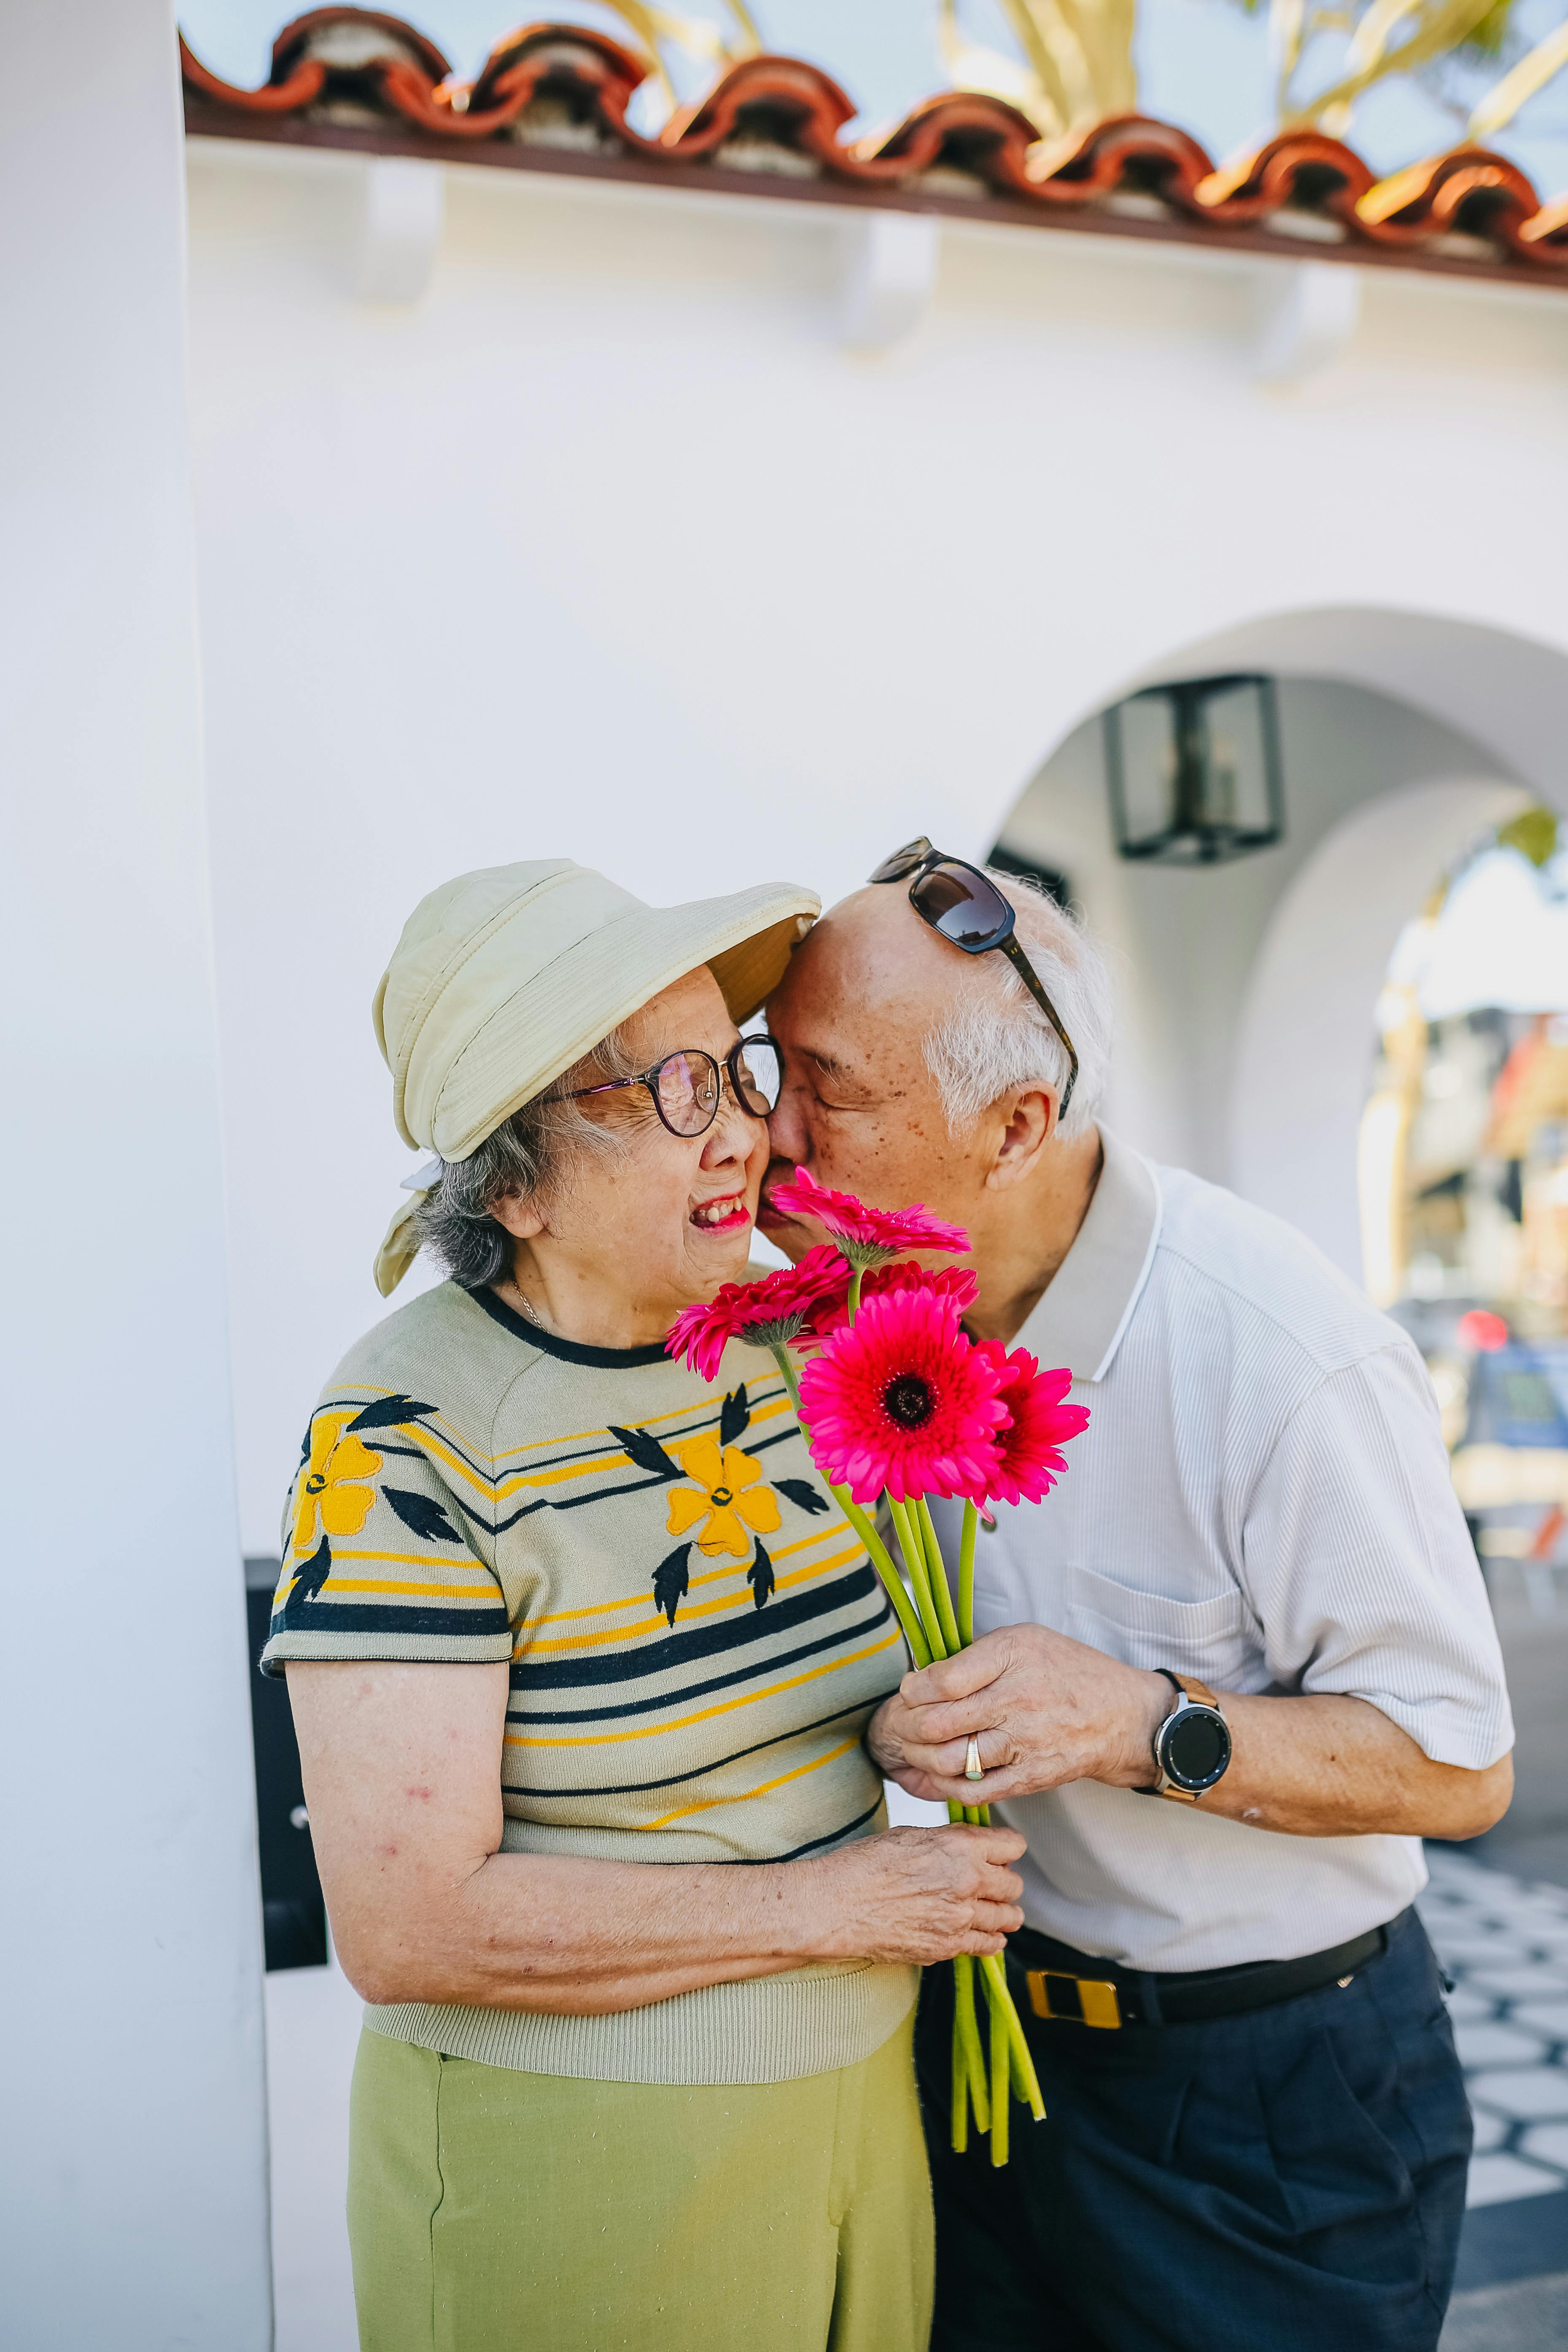 Elderly couple having a romantic moment | Source: Pexels